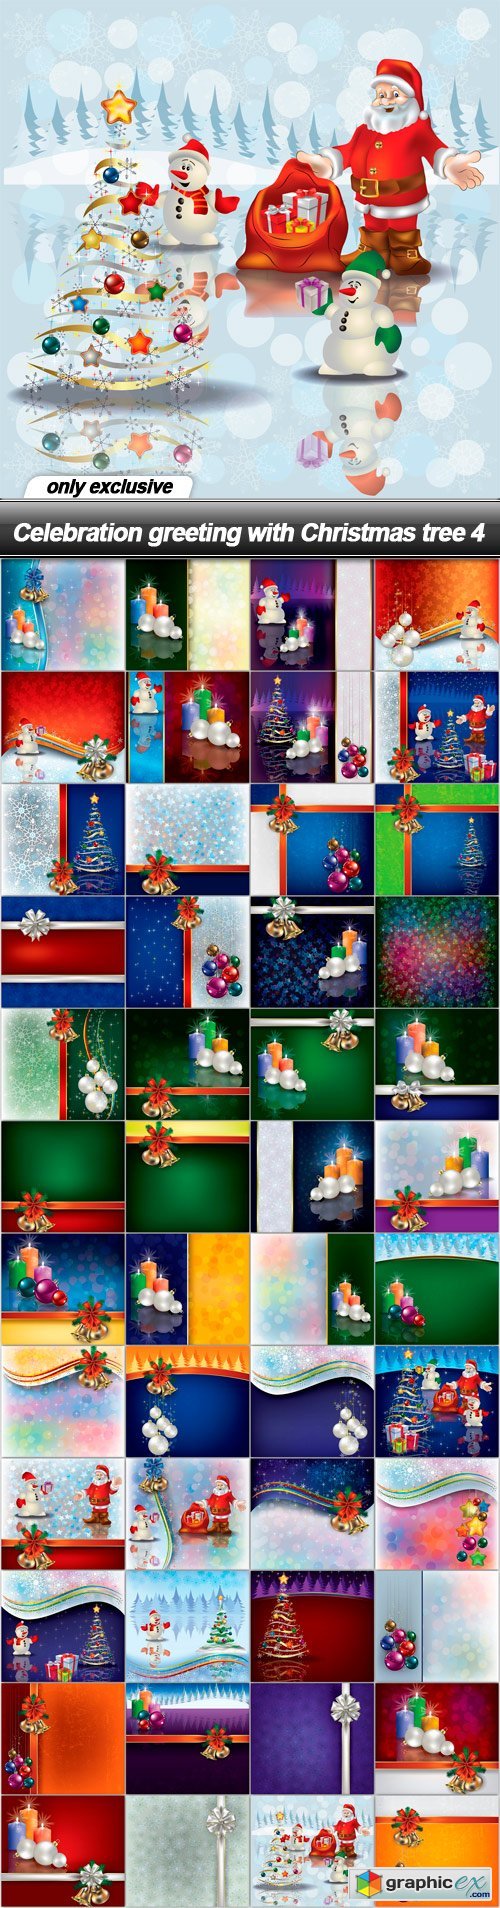 Celebration greeting with Christmas tree 4 - 48 EPS